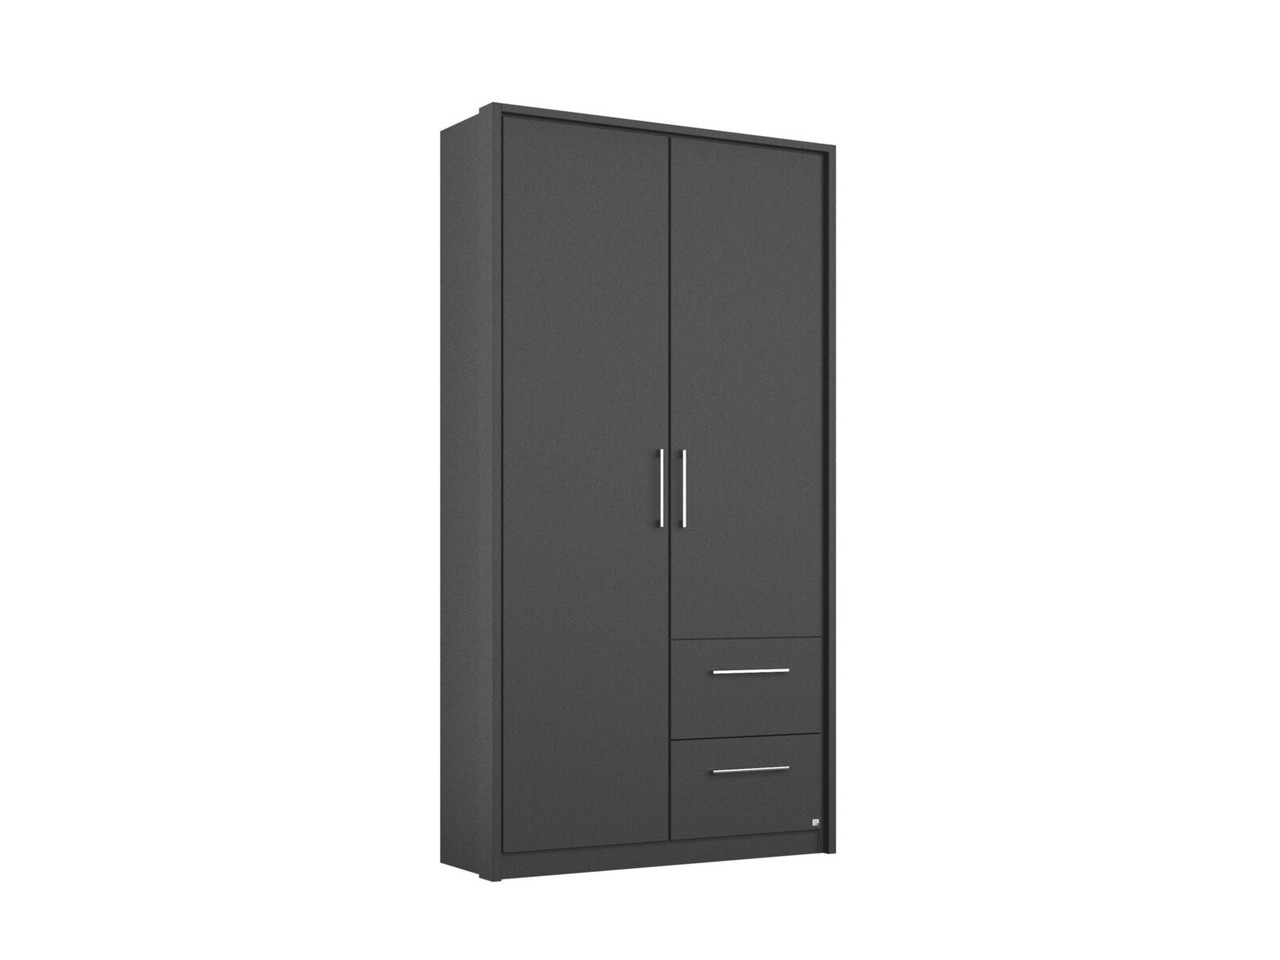 Lorenzo 2 Door 2 Drawer Hinged Wardrobe H: 212 X W: 99 X L: 54 Cm Metallic Grey   Metallic Grey